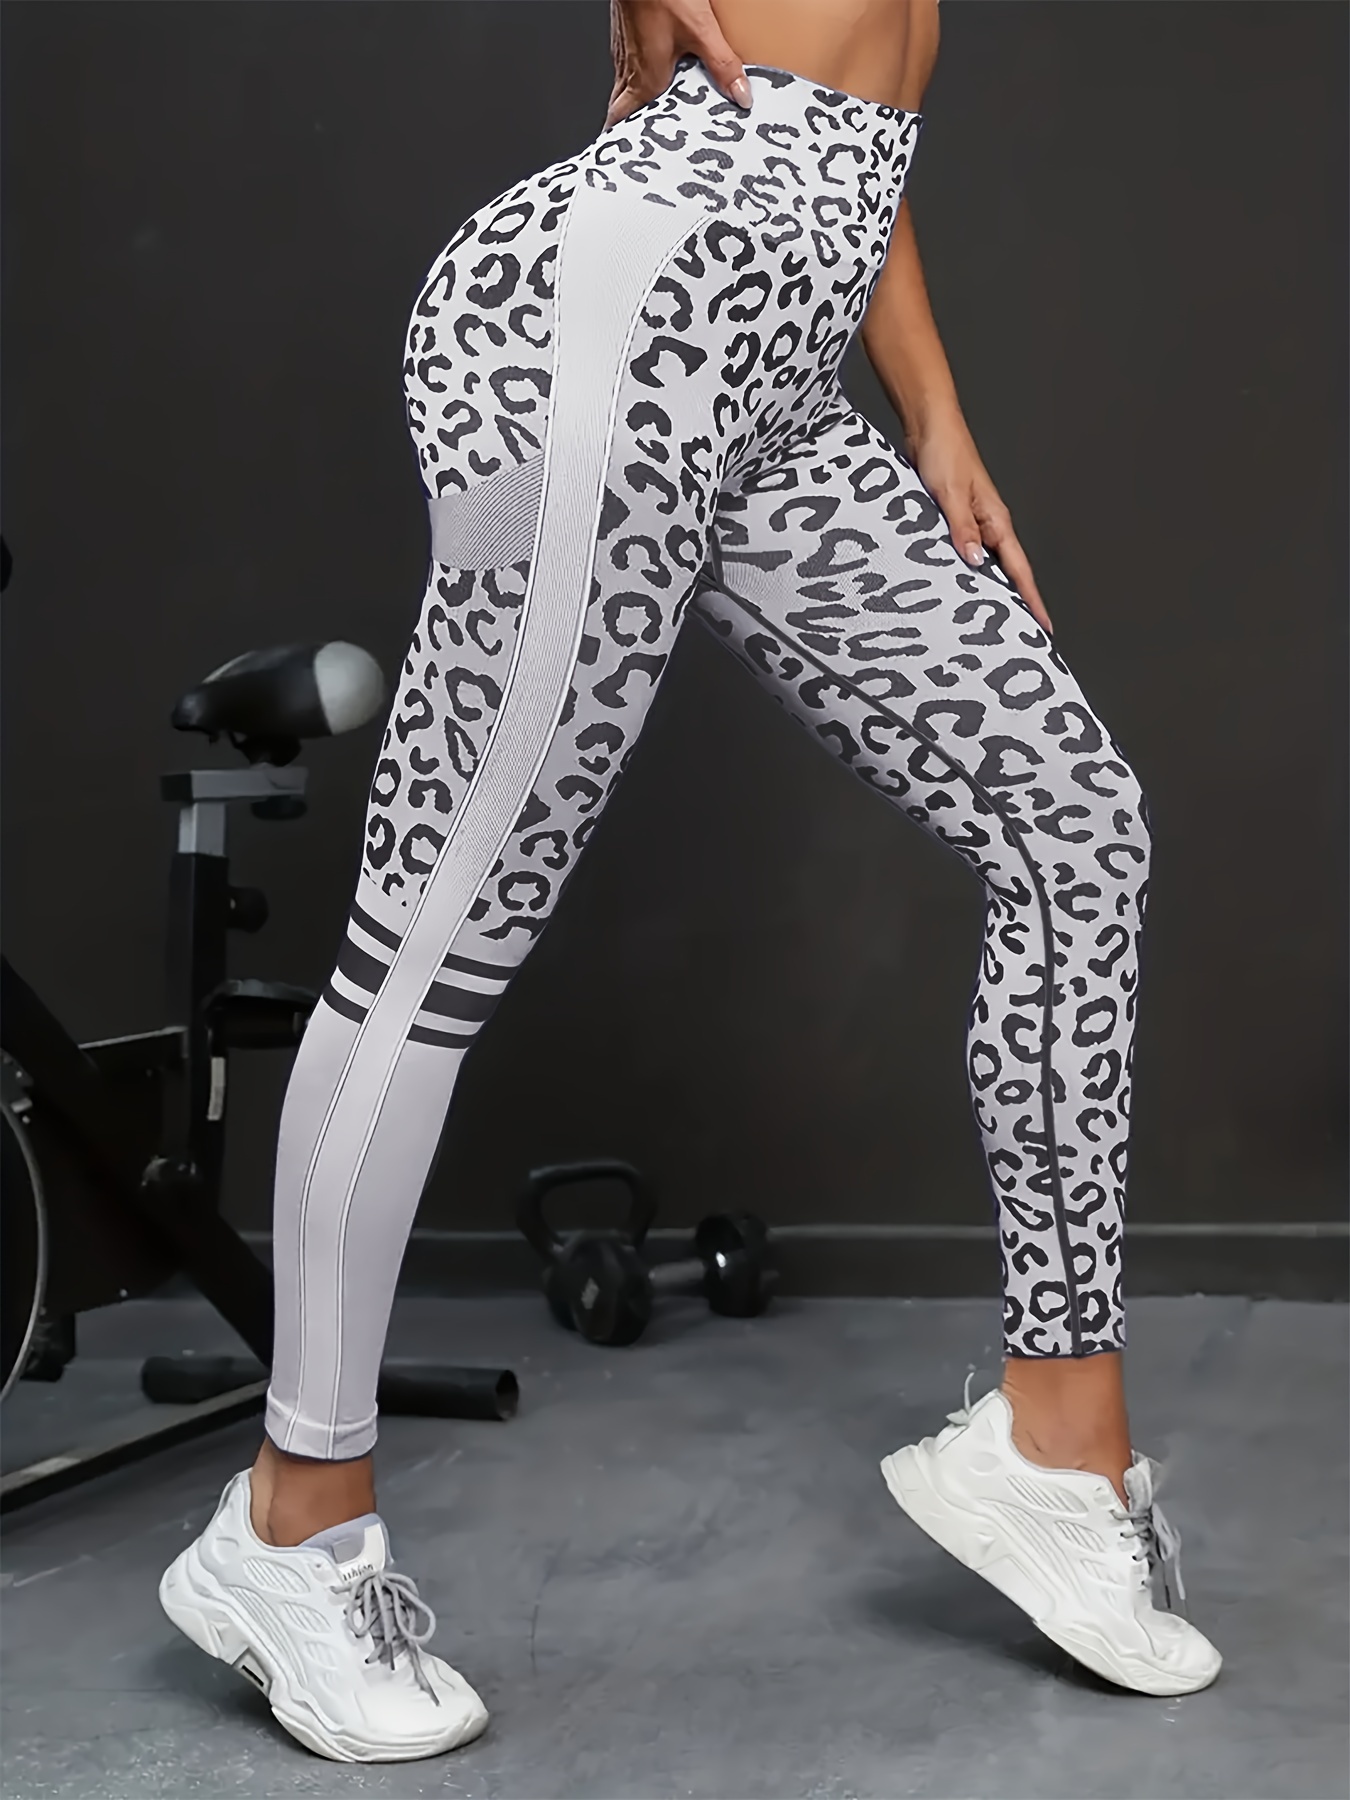 Adidas Leopard Active Pants, Tights & Leggings